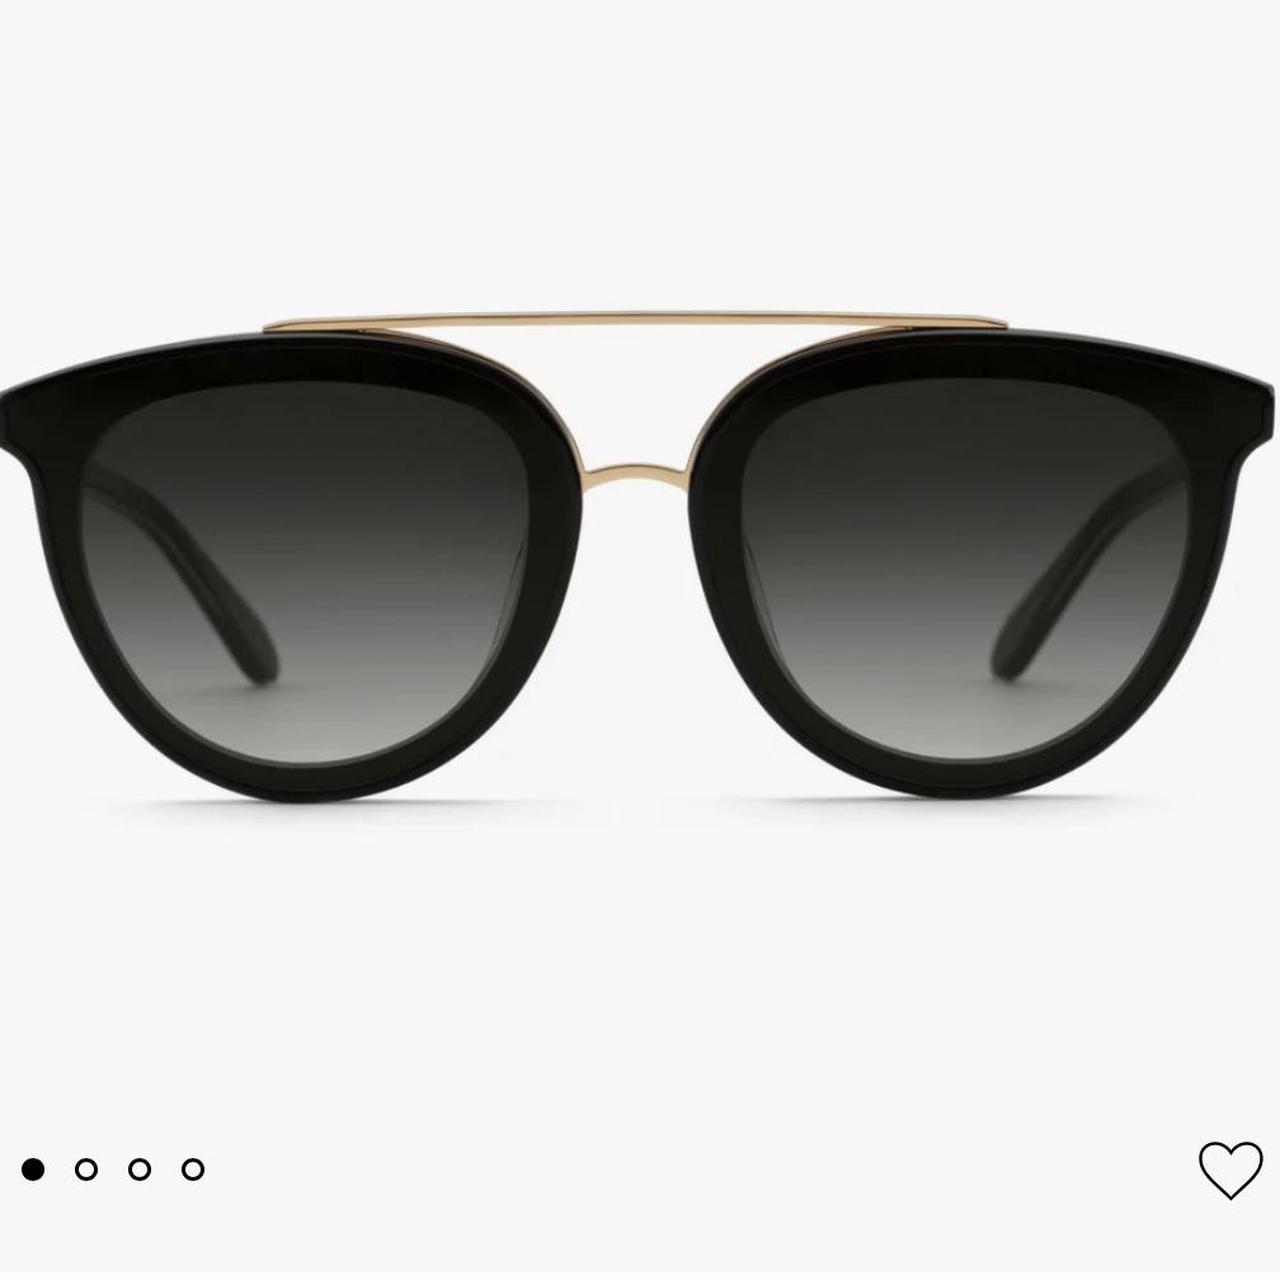 Khaki Krew Women's Black and Gold Sunglasses (3)